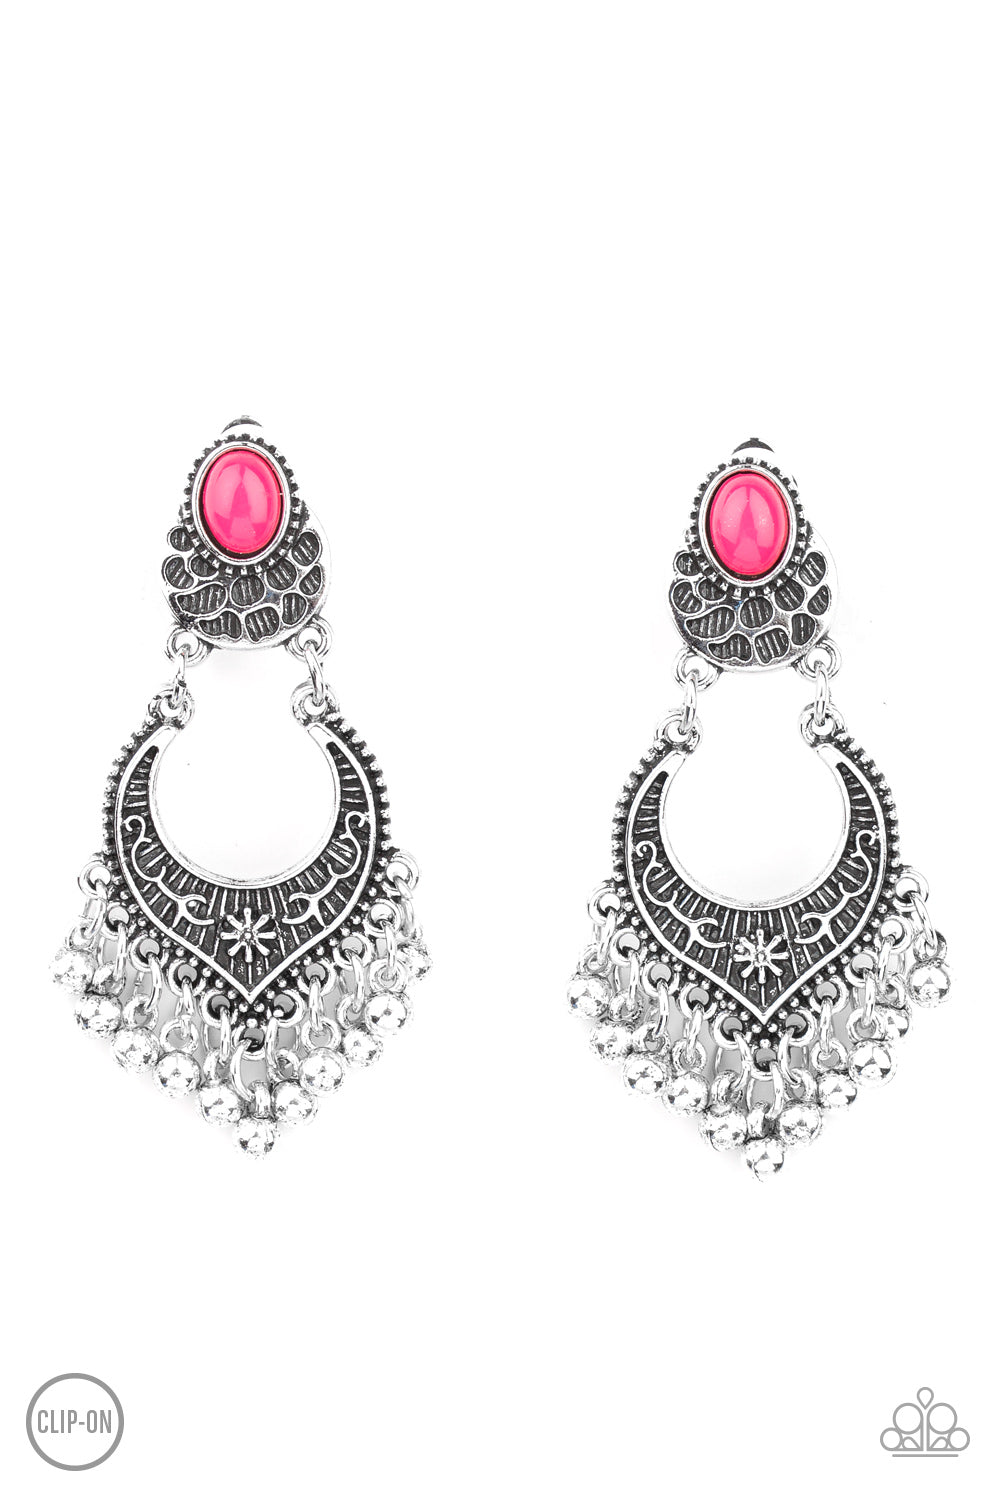 Paparazzi - Summery Gardens - Pink Earrings